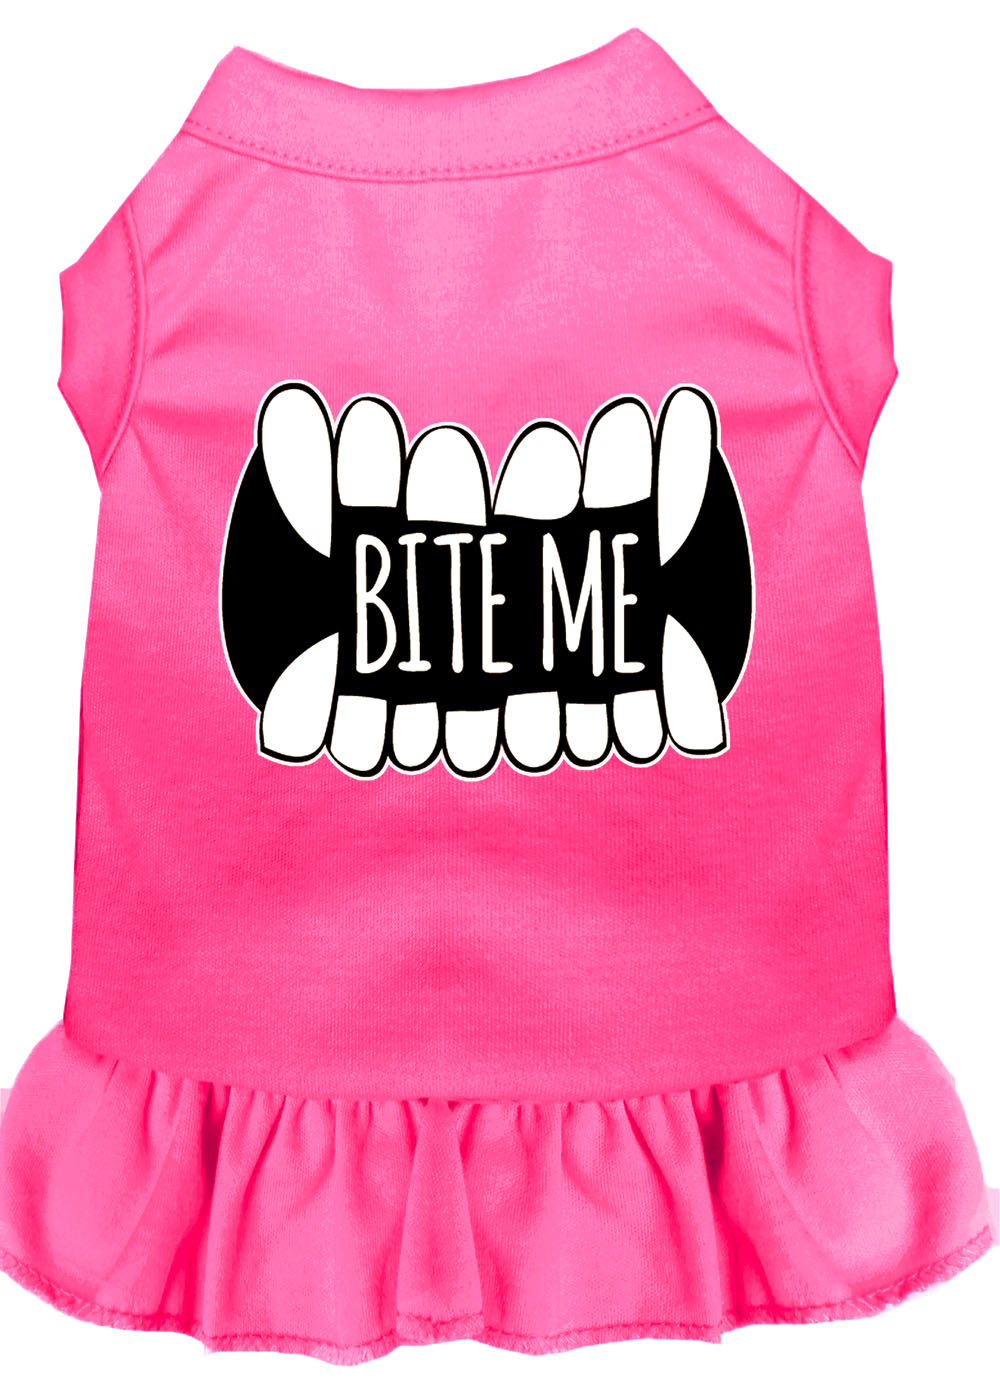 Bite Me Screen Print Dog Dress Bright Pink Sm